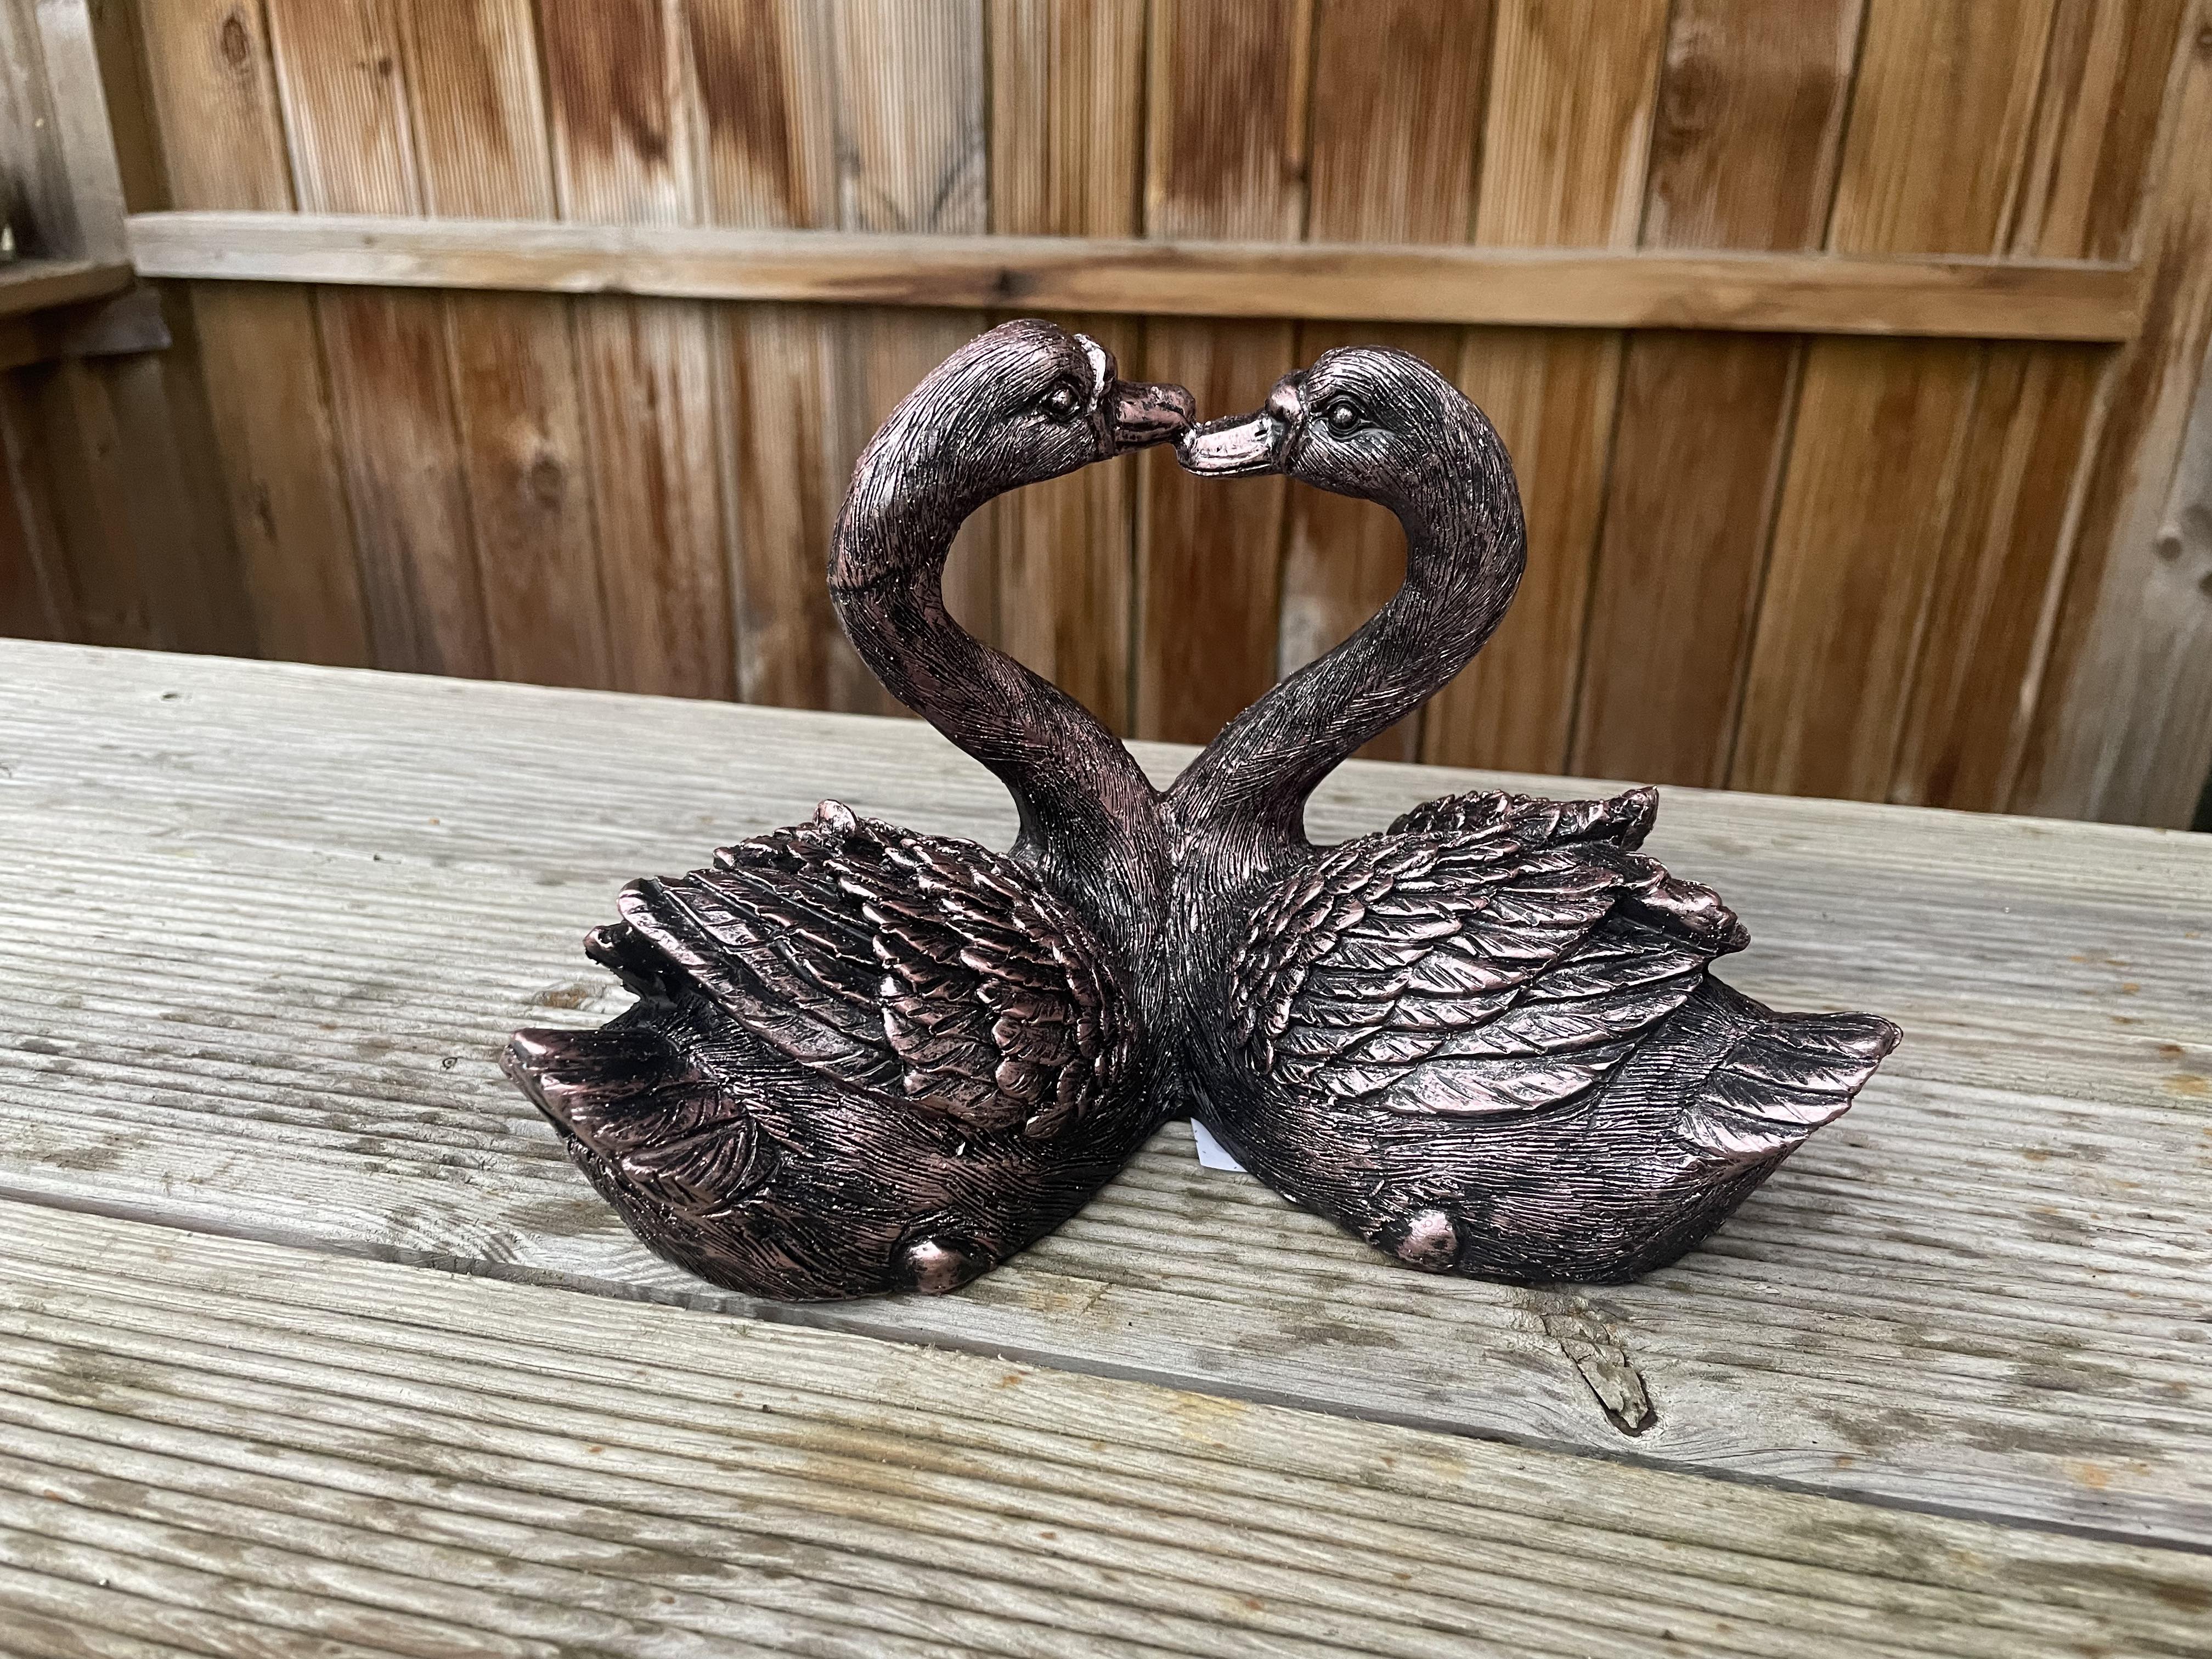 Loving Swan Couple